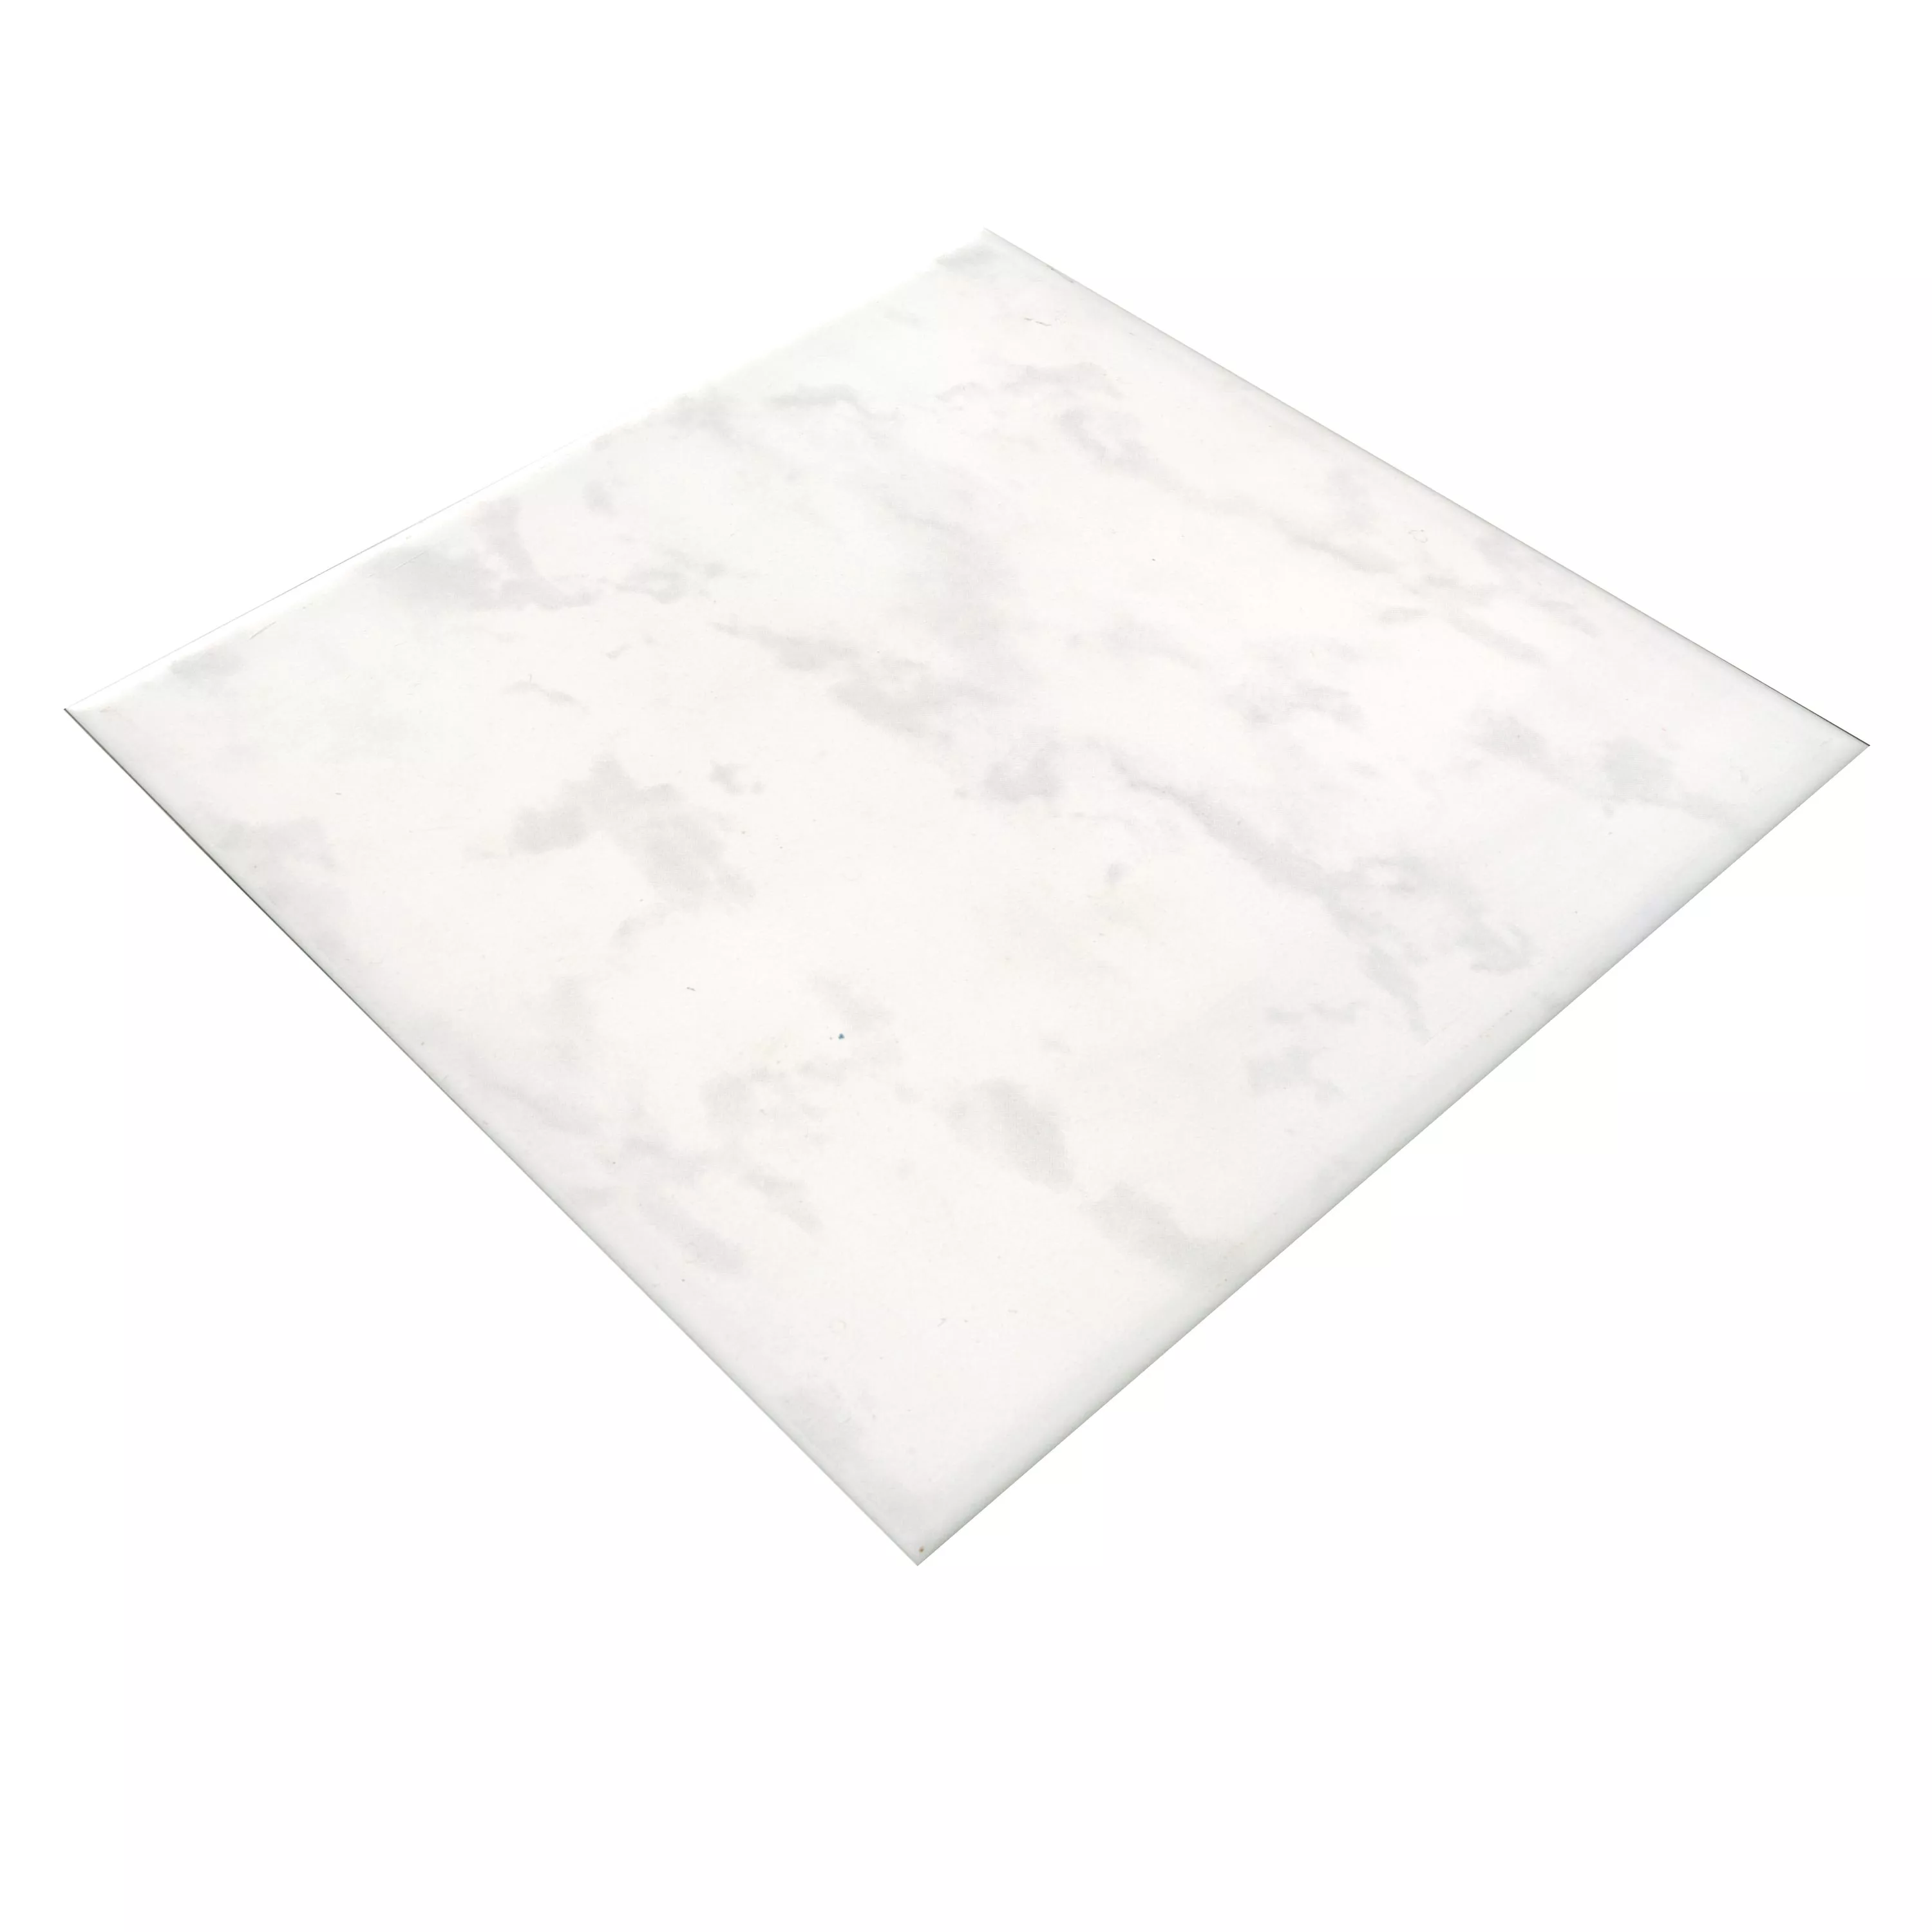 Sample Floor Tiles Kayhude Marbled 20x20cm Grey